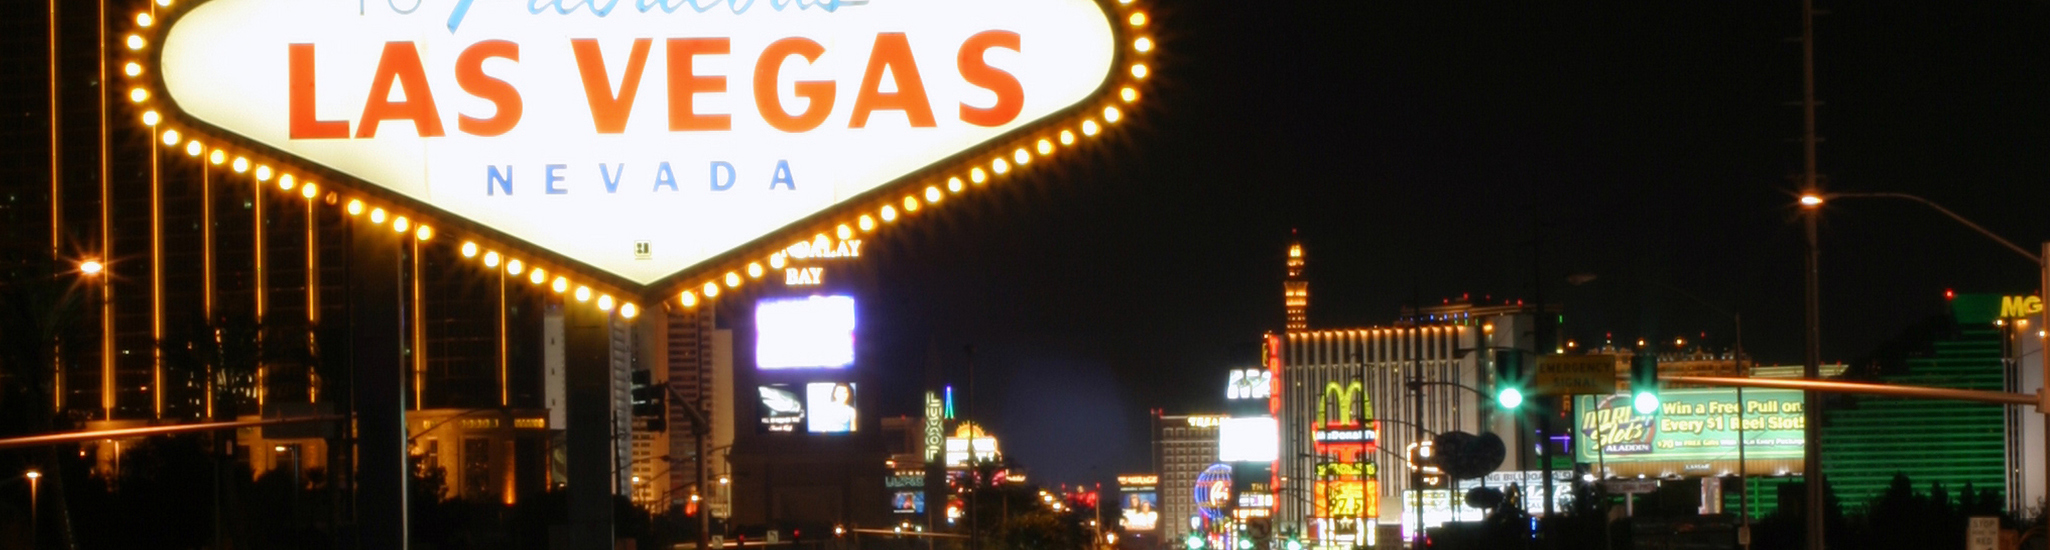 Mobiles Casino Leuchtreklame Las Vegas